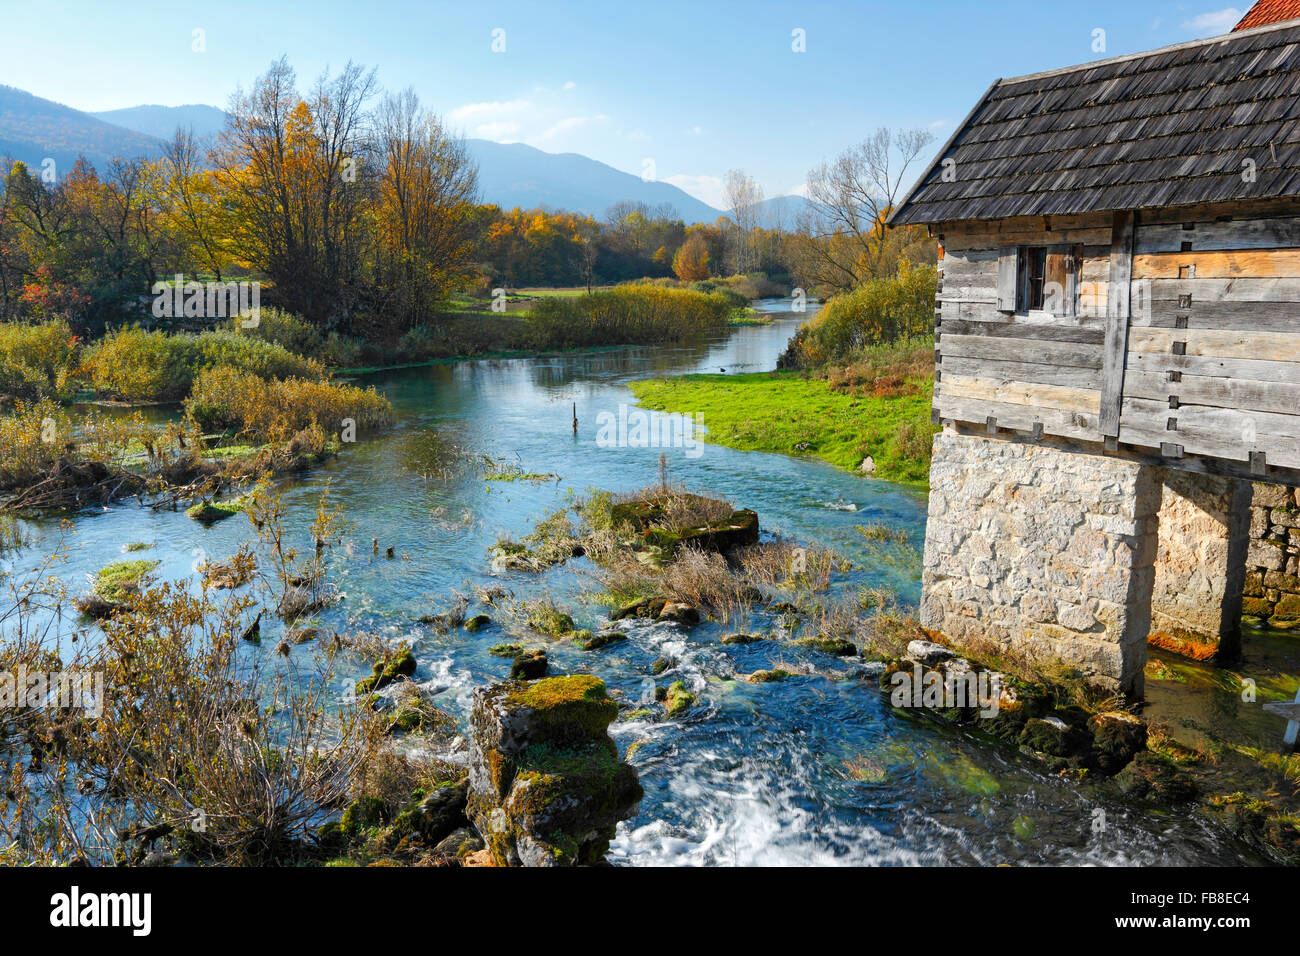 Gacla river and old mill in Croatia Stock Photo